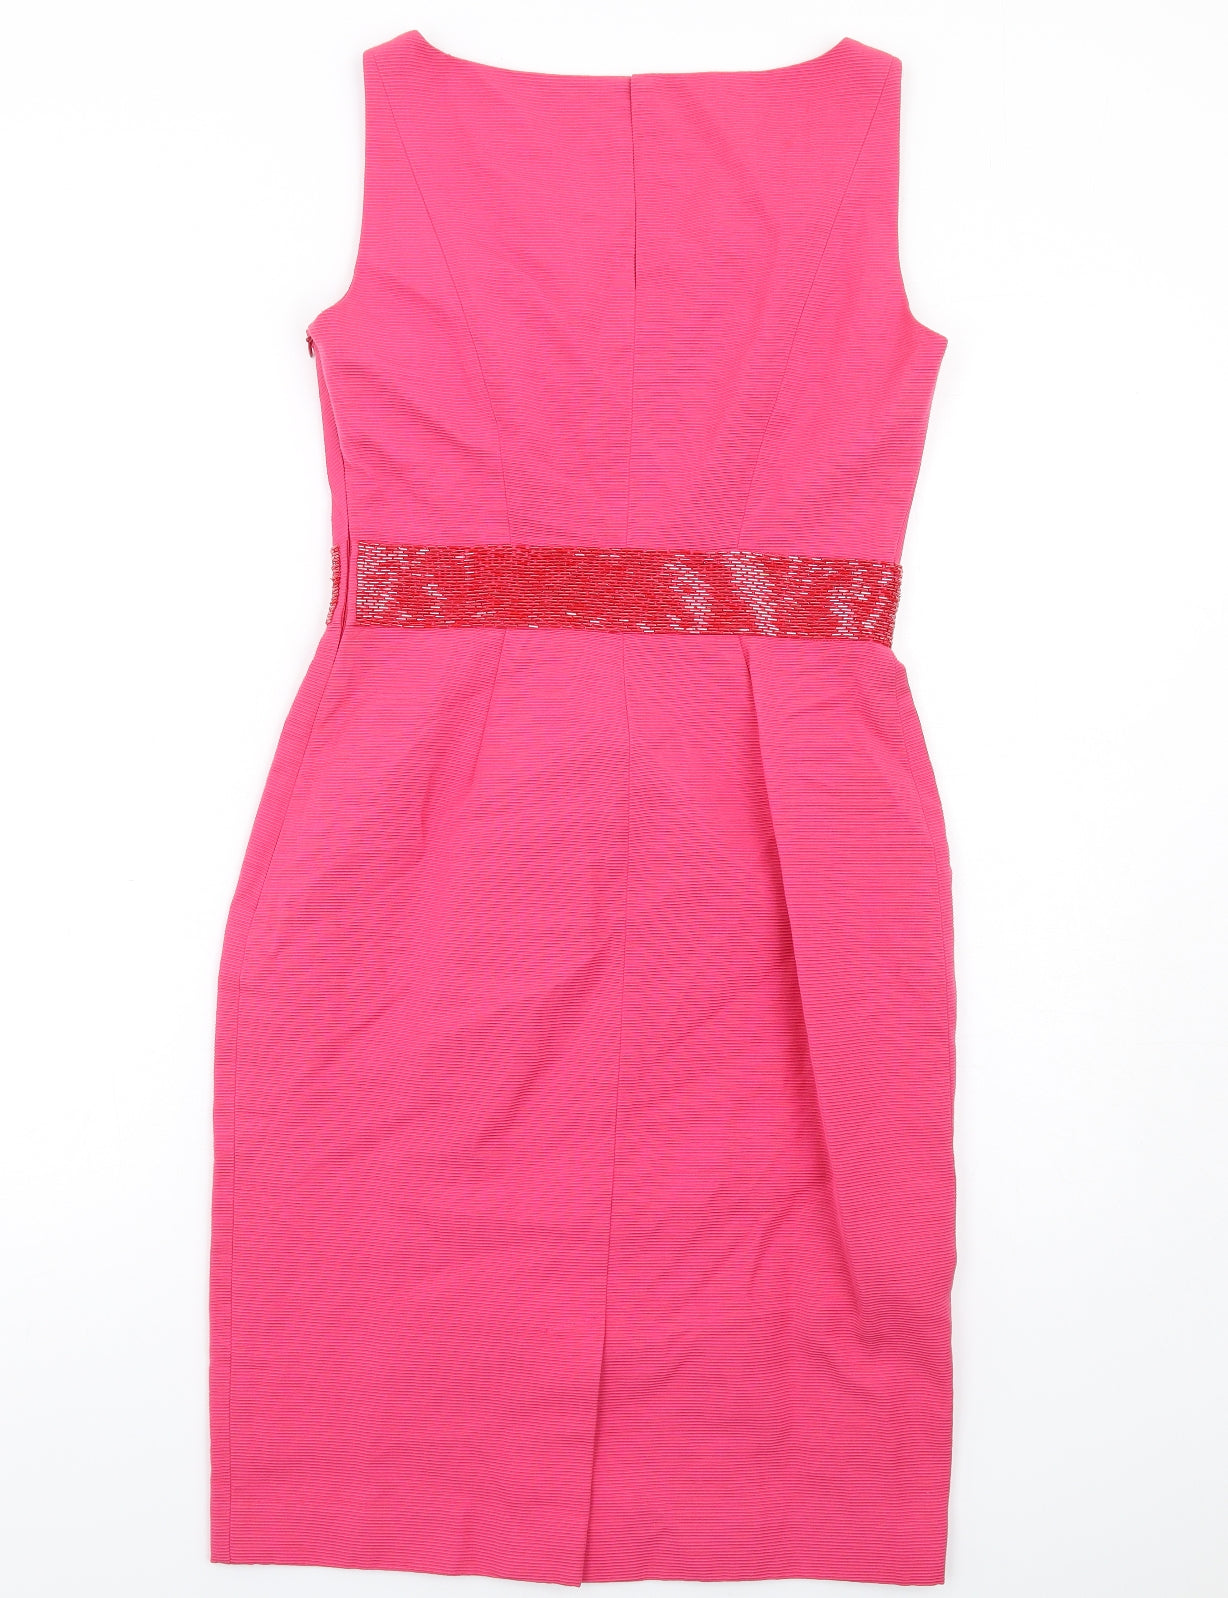 L.K. Bennett Womens Pink Cotton Pencil Dress Size 8 Boat Neck Zip - Embellished